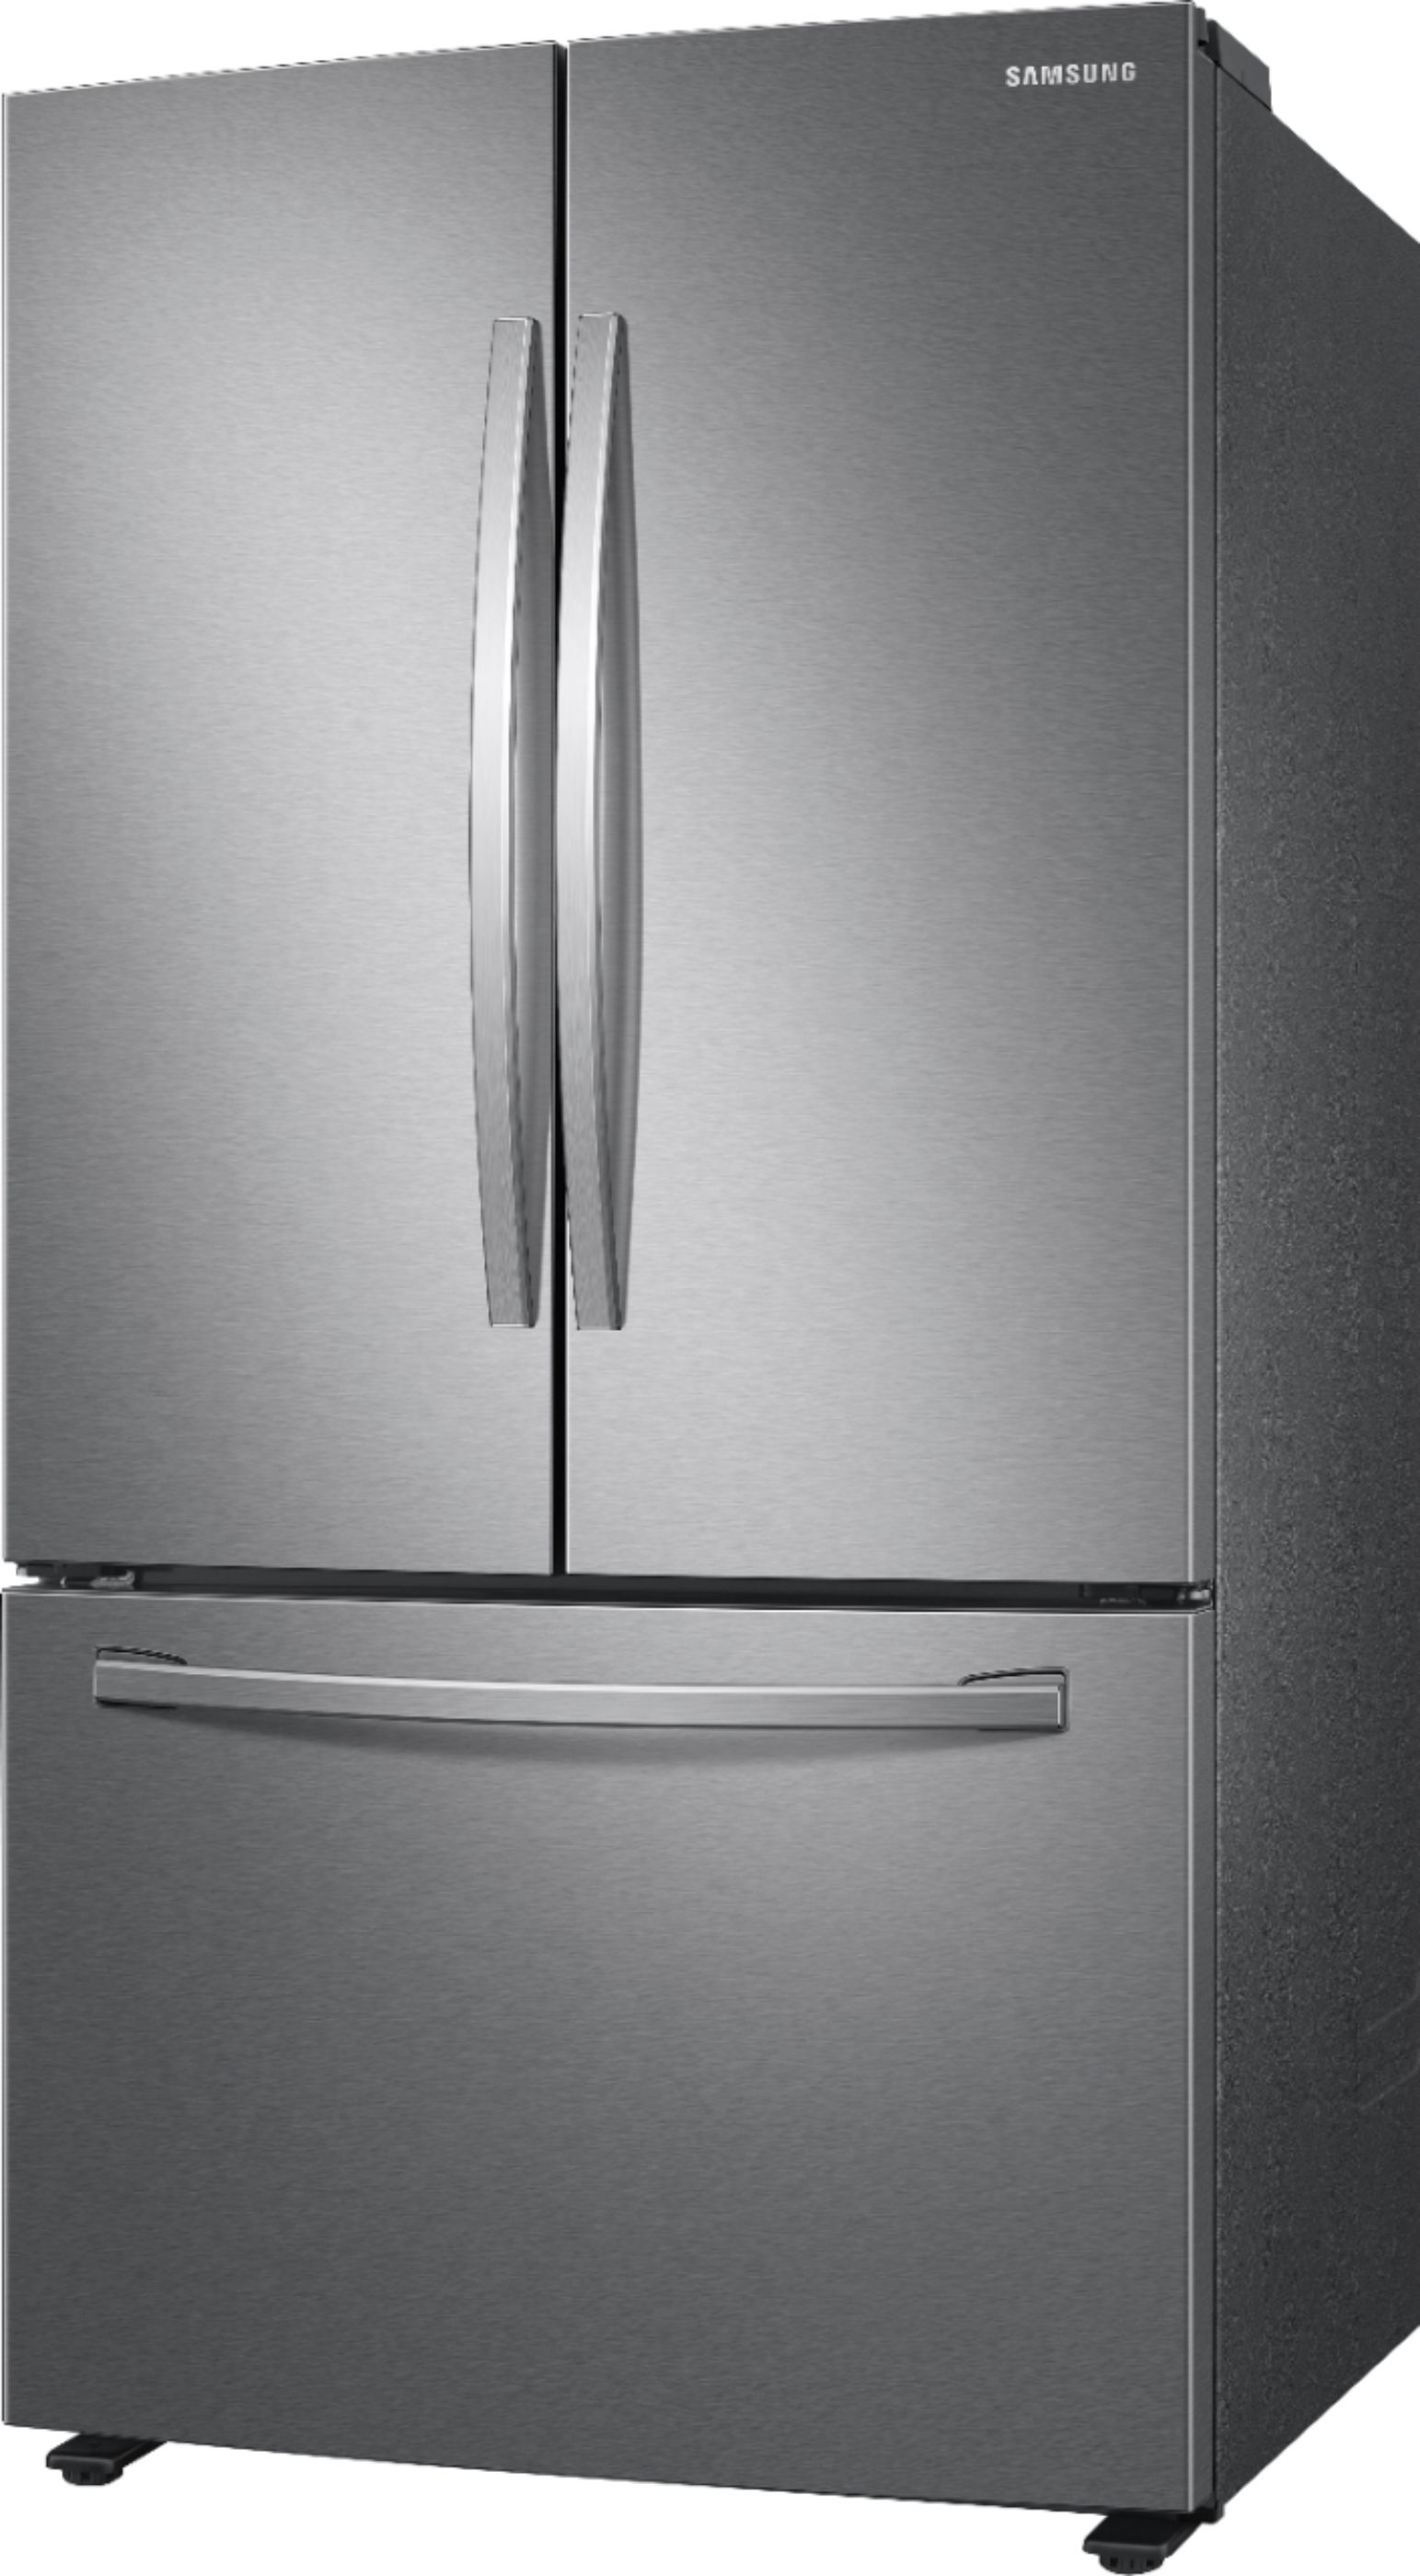 Left View: Whirlpool - 19.3 Cu. Ft. Top-Freezer Refrigerator - Monochromatic Stainless Steel